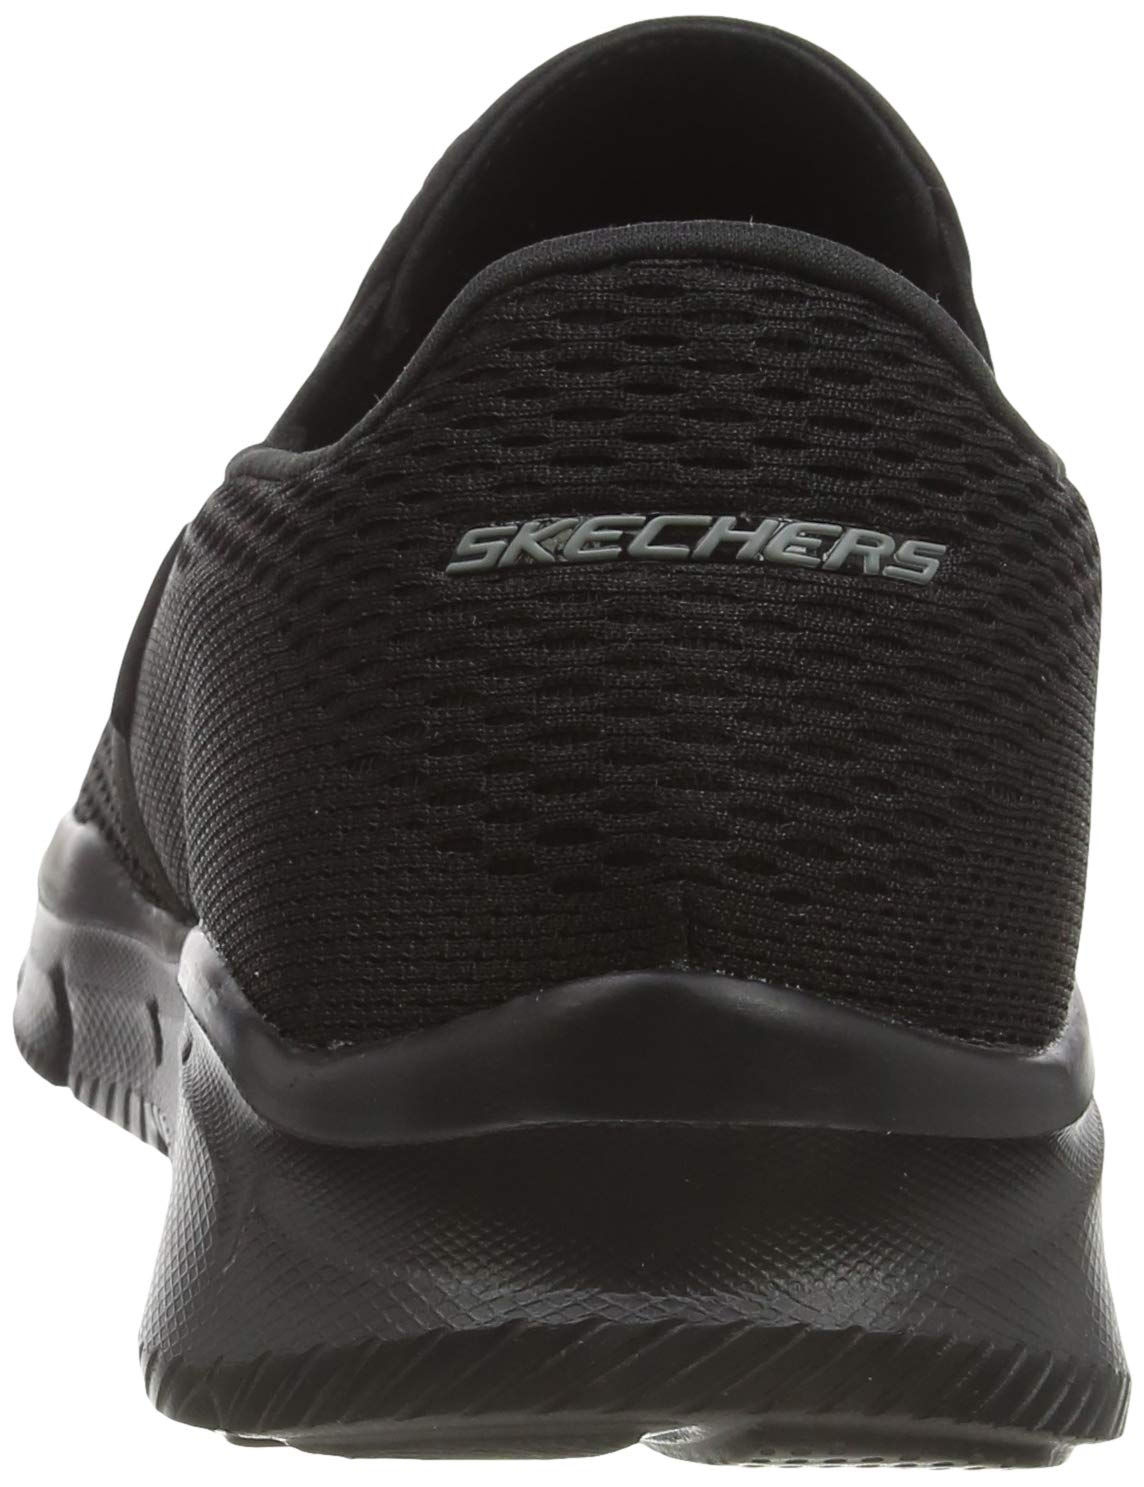 Skechers Men's Equalizer Double Play Slip-On Loafer